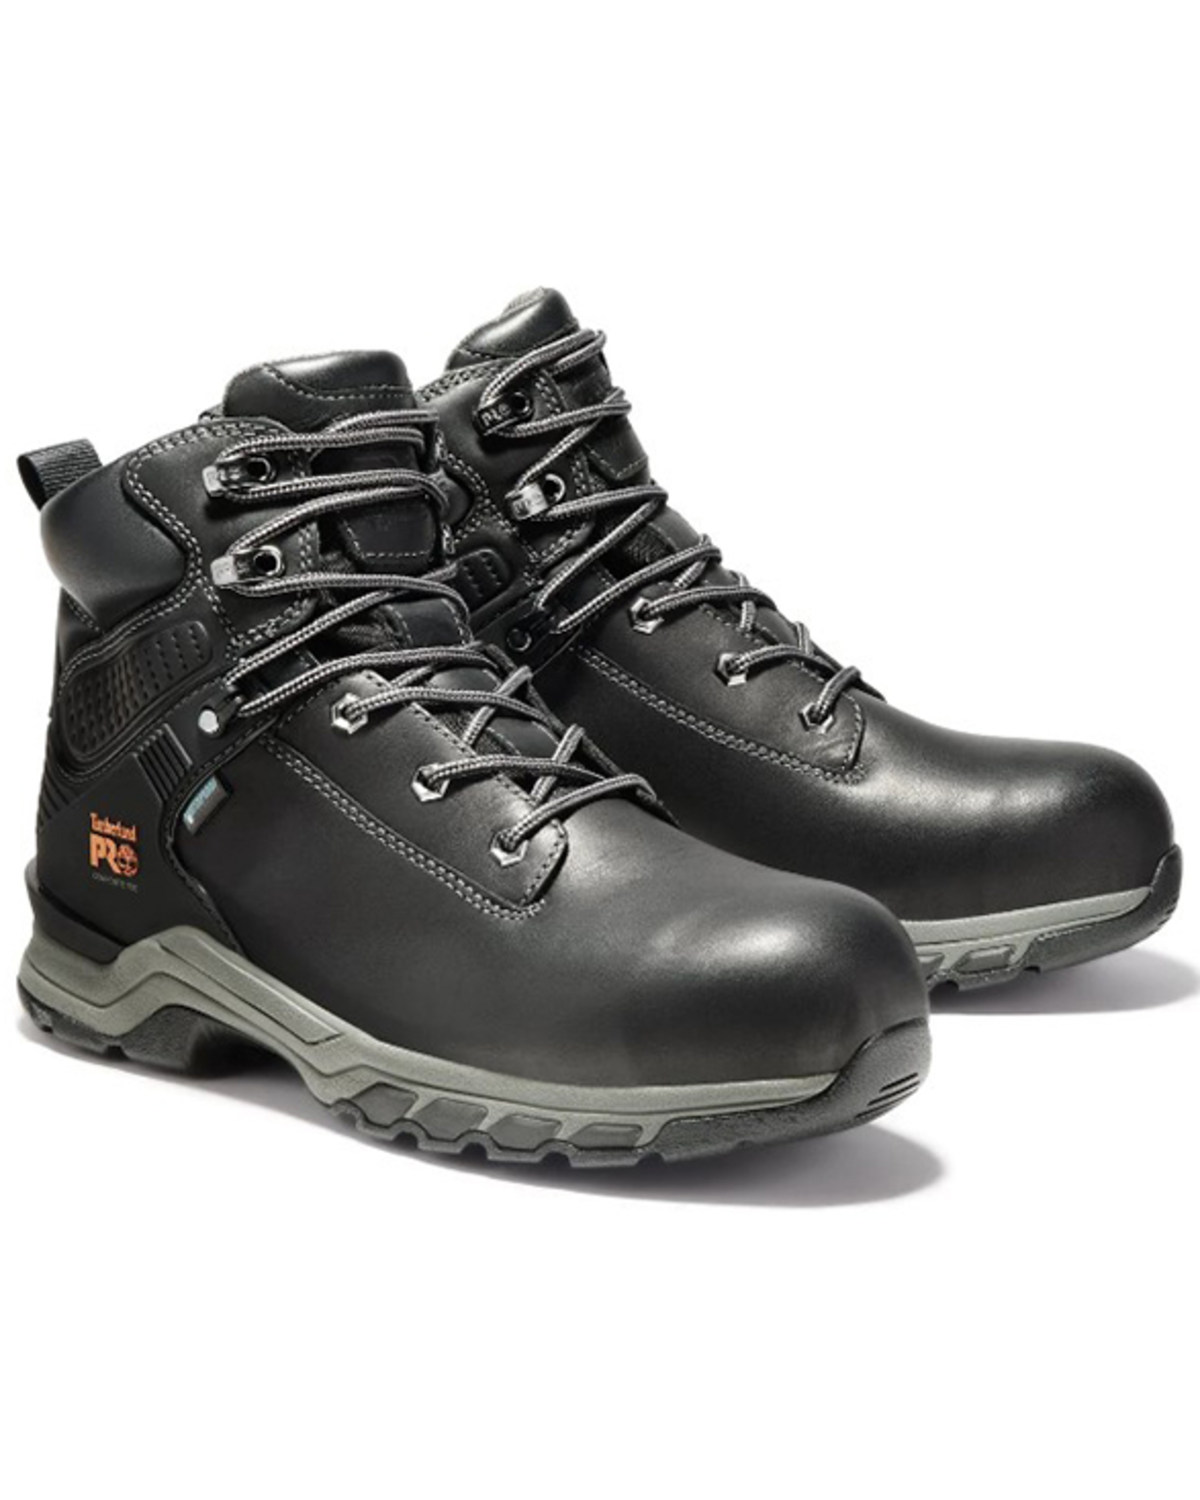 Timberland Men's 6" Hypercharge Waterproof Work Boots - Composite Toe